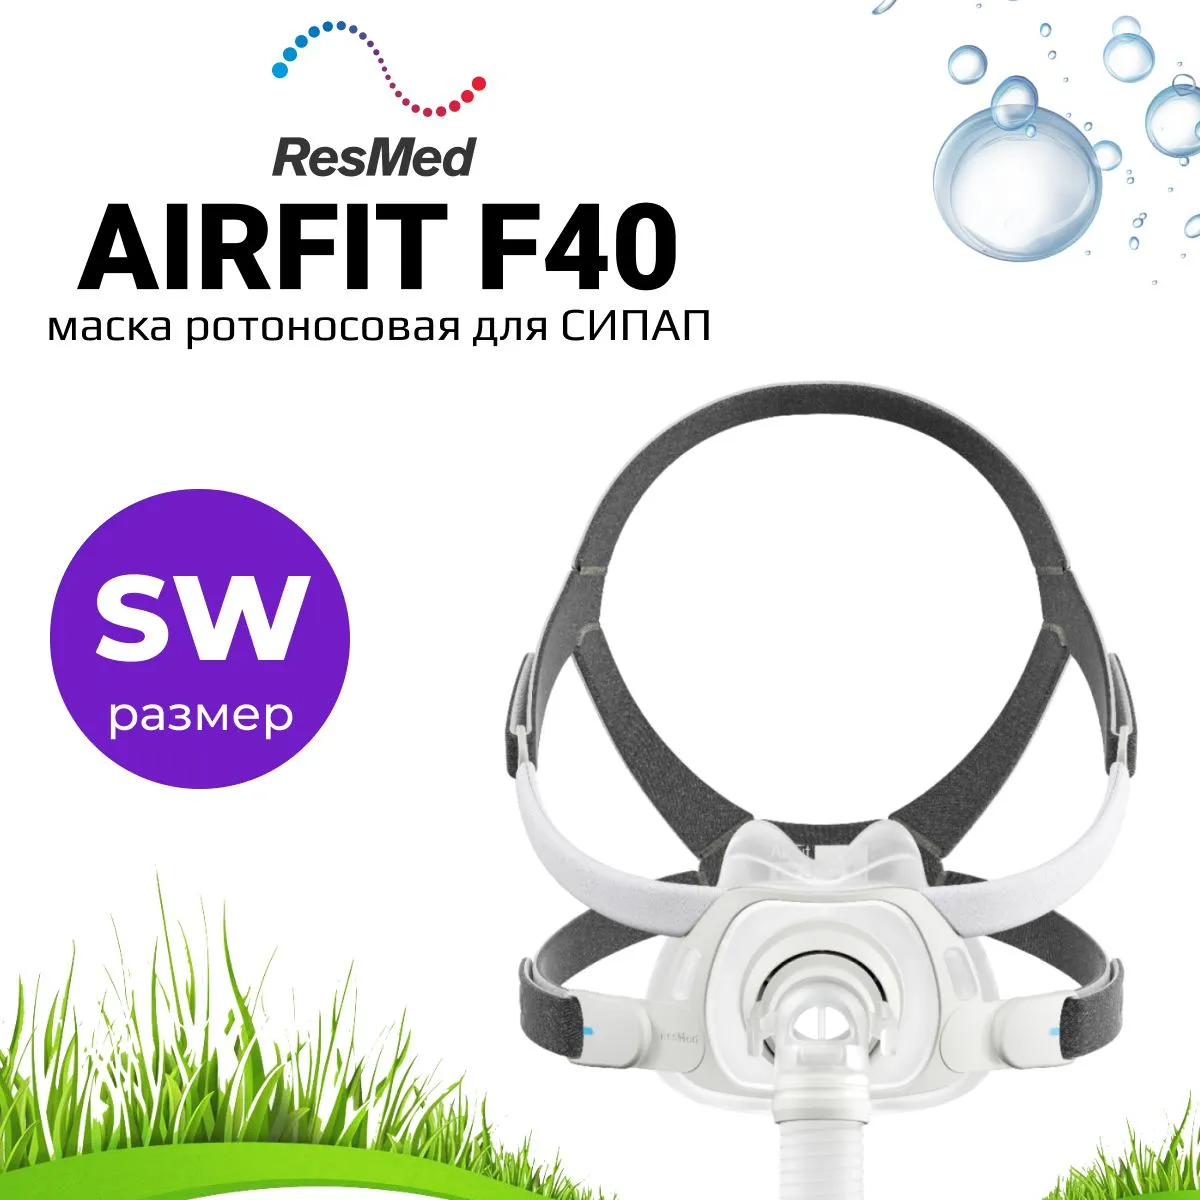 ResMed AirFit F40 QuietAir размер SW ротоносовая маска для СИПАП